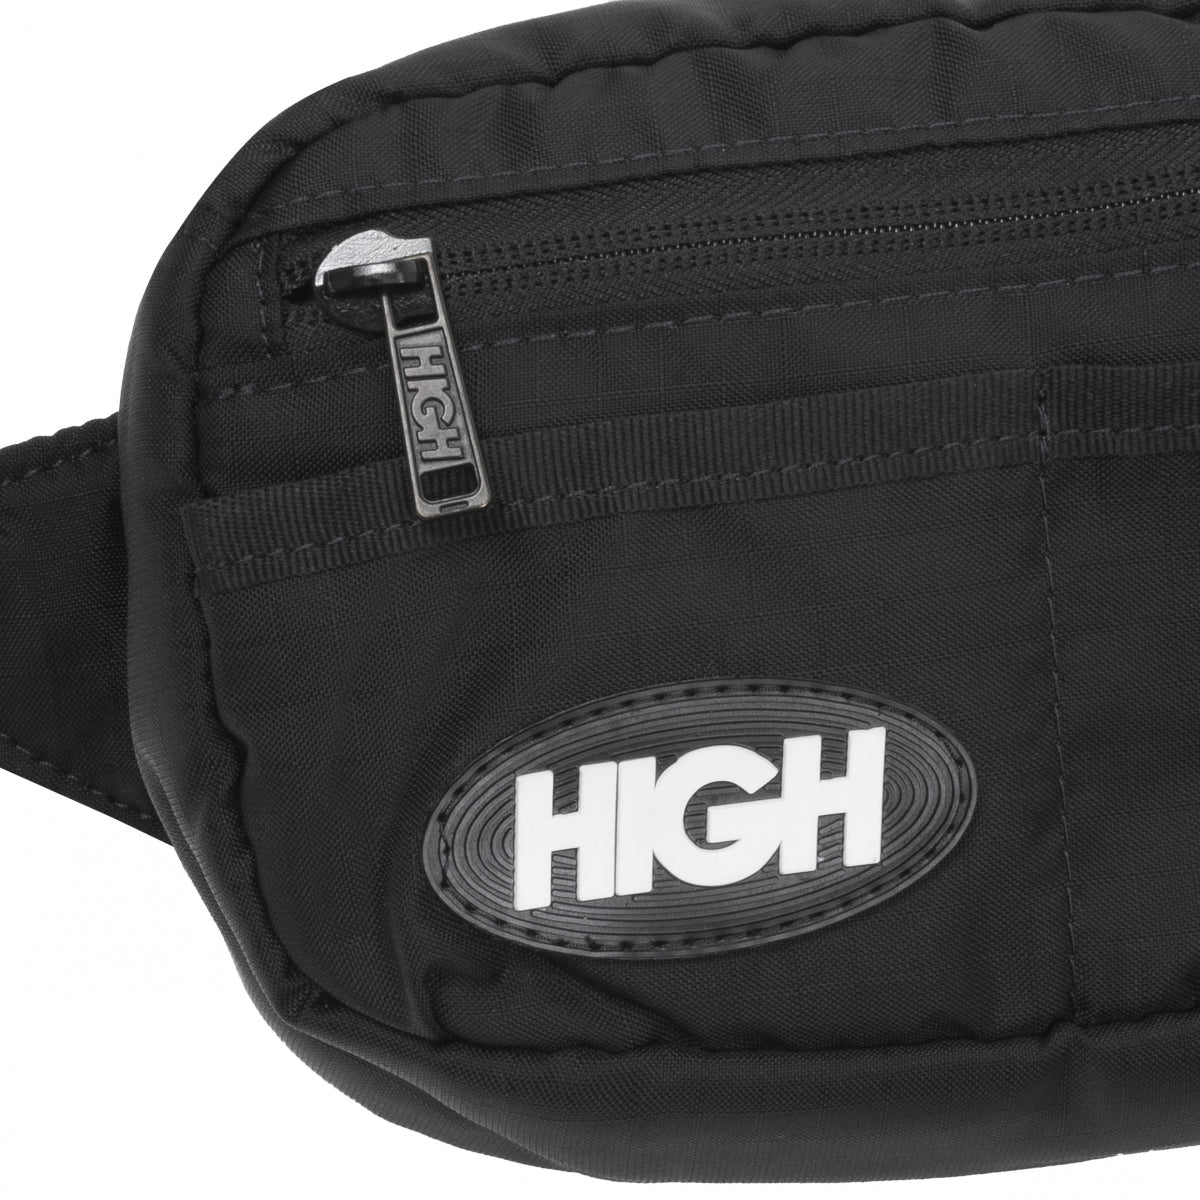 HIGH - Waist Bag Bundle Black - Slow Office